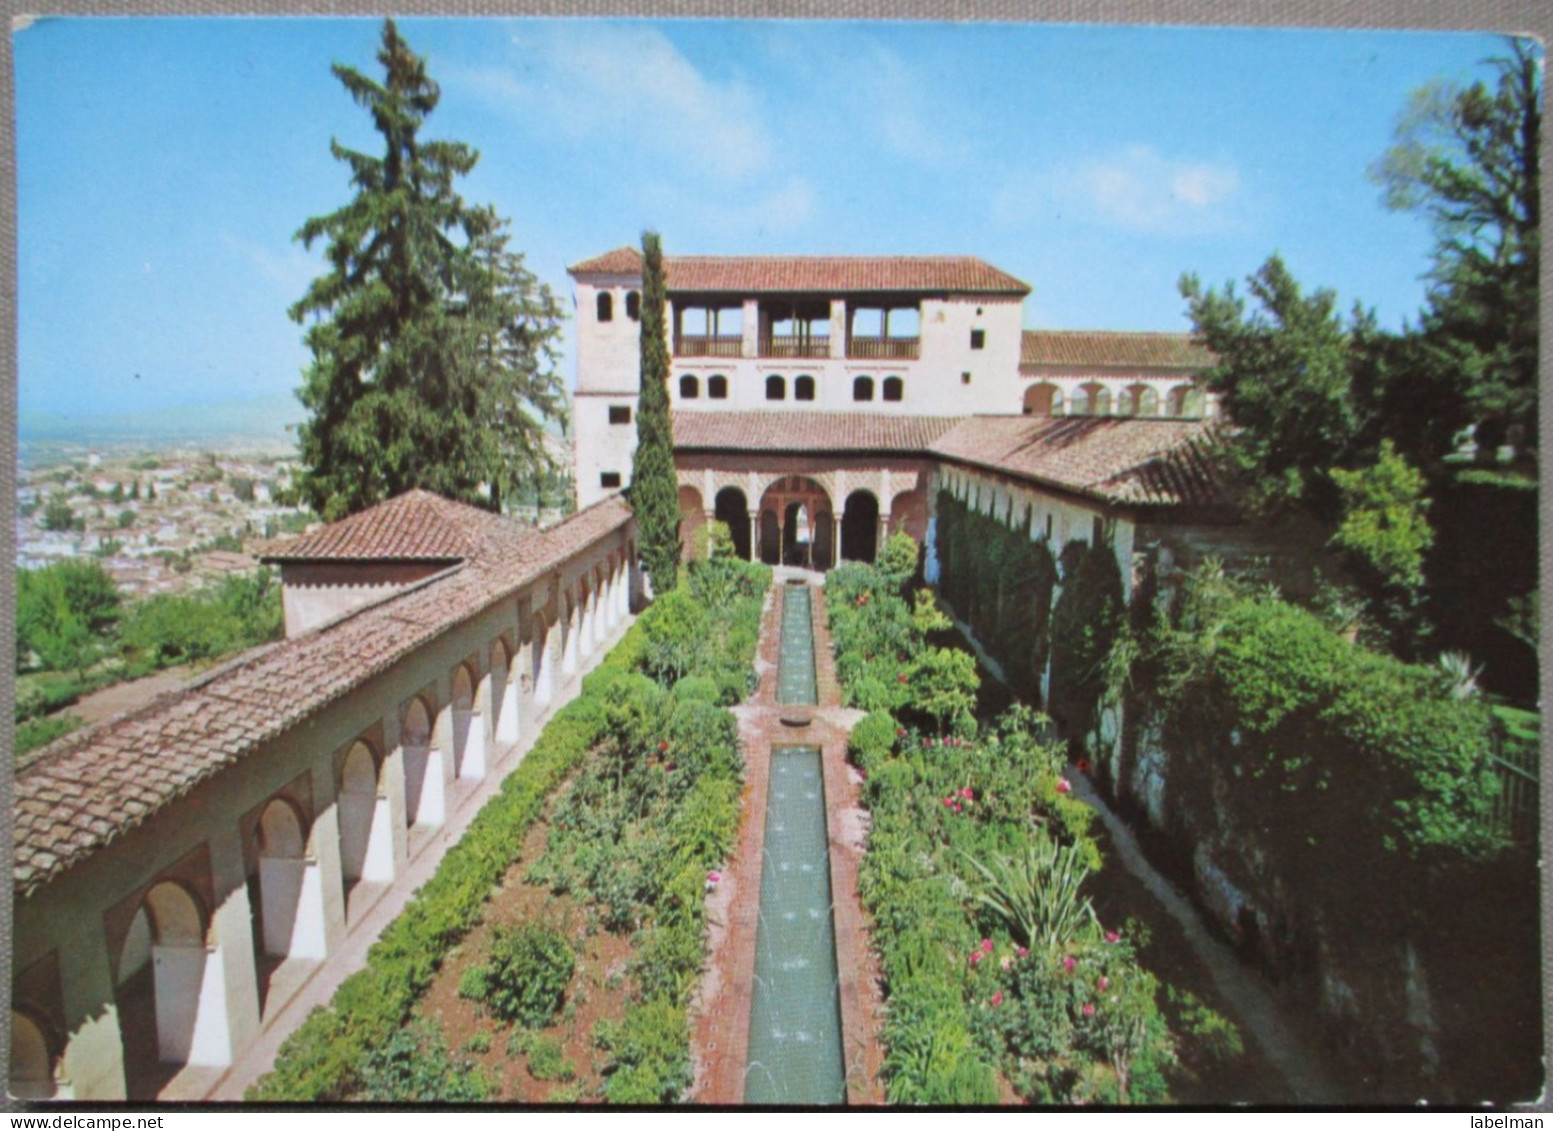 SPAIN SPAGNE ANDALUCIA GRANADA GENERALIFE PALACE GARDEN TARJETA POSTAL POSTCARD ANSICHTSKARTE CARTEM POSTALE CARTOLINA - Segovia